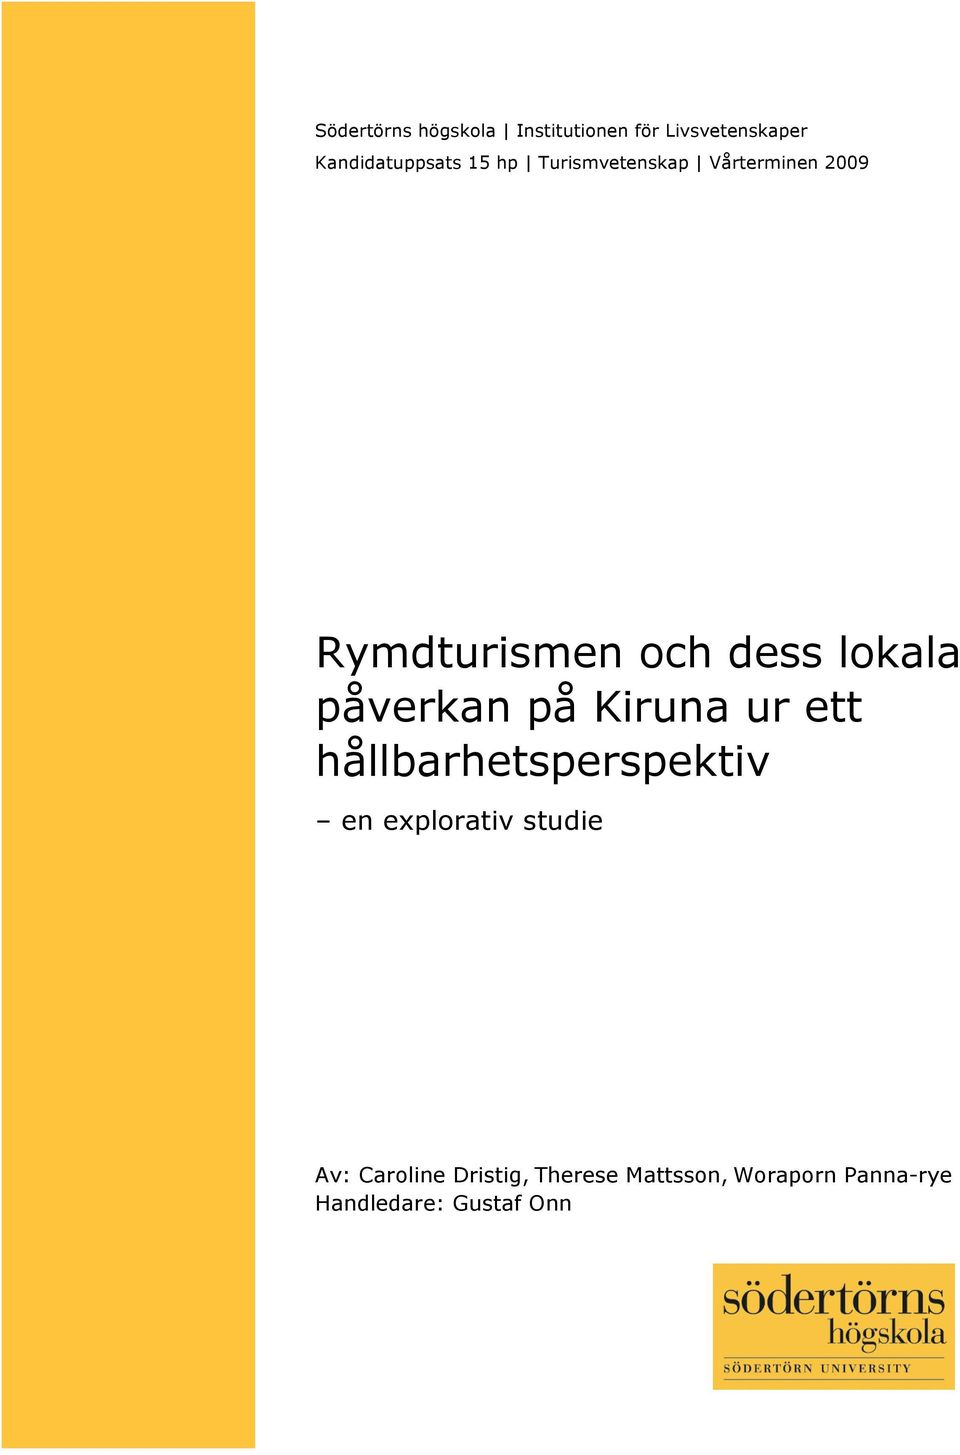 påverkan på Kiruna ur ett hållbarhetsperspektiv en explorativ studie